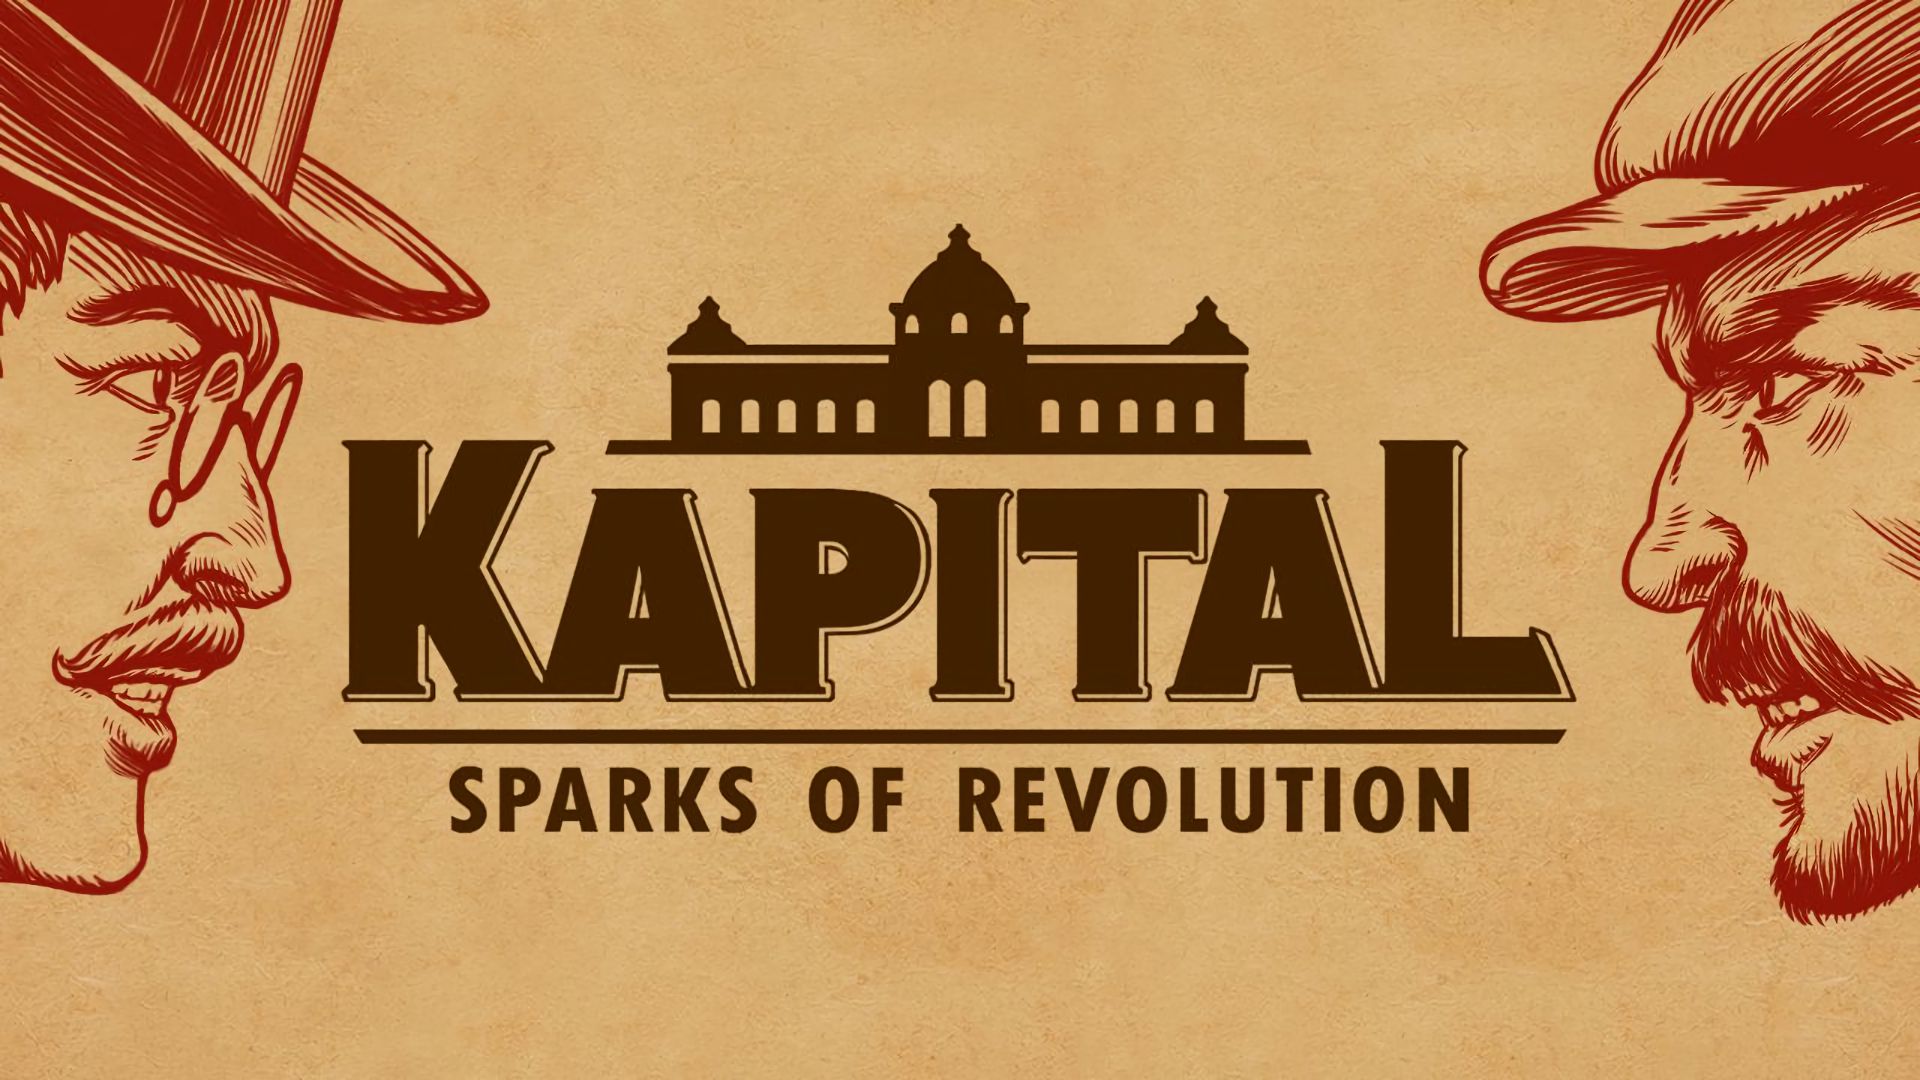 Video Game Kapital: Sparks of Revolution HD Wallpaper | Background Image